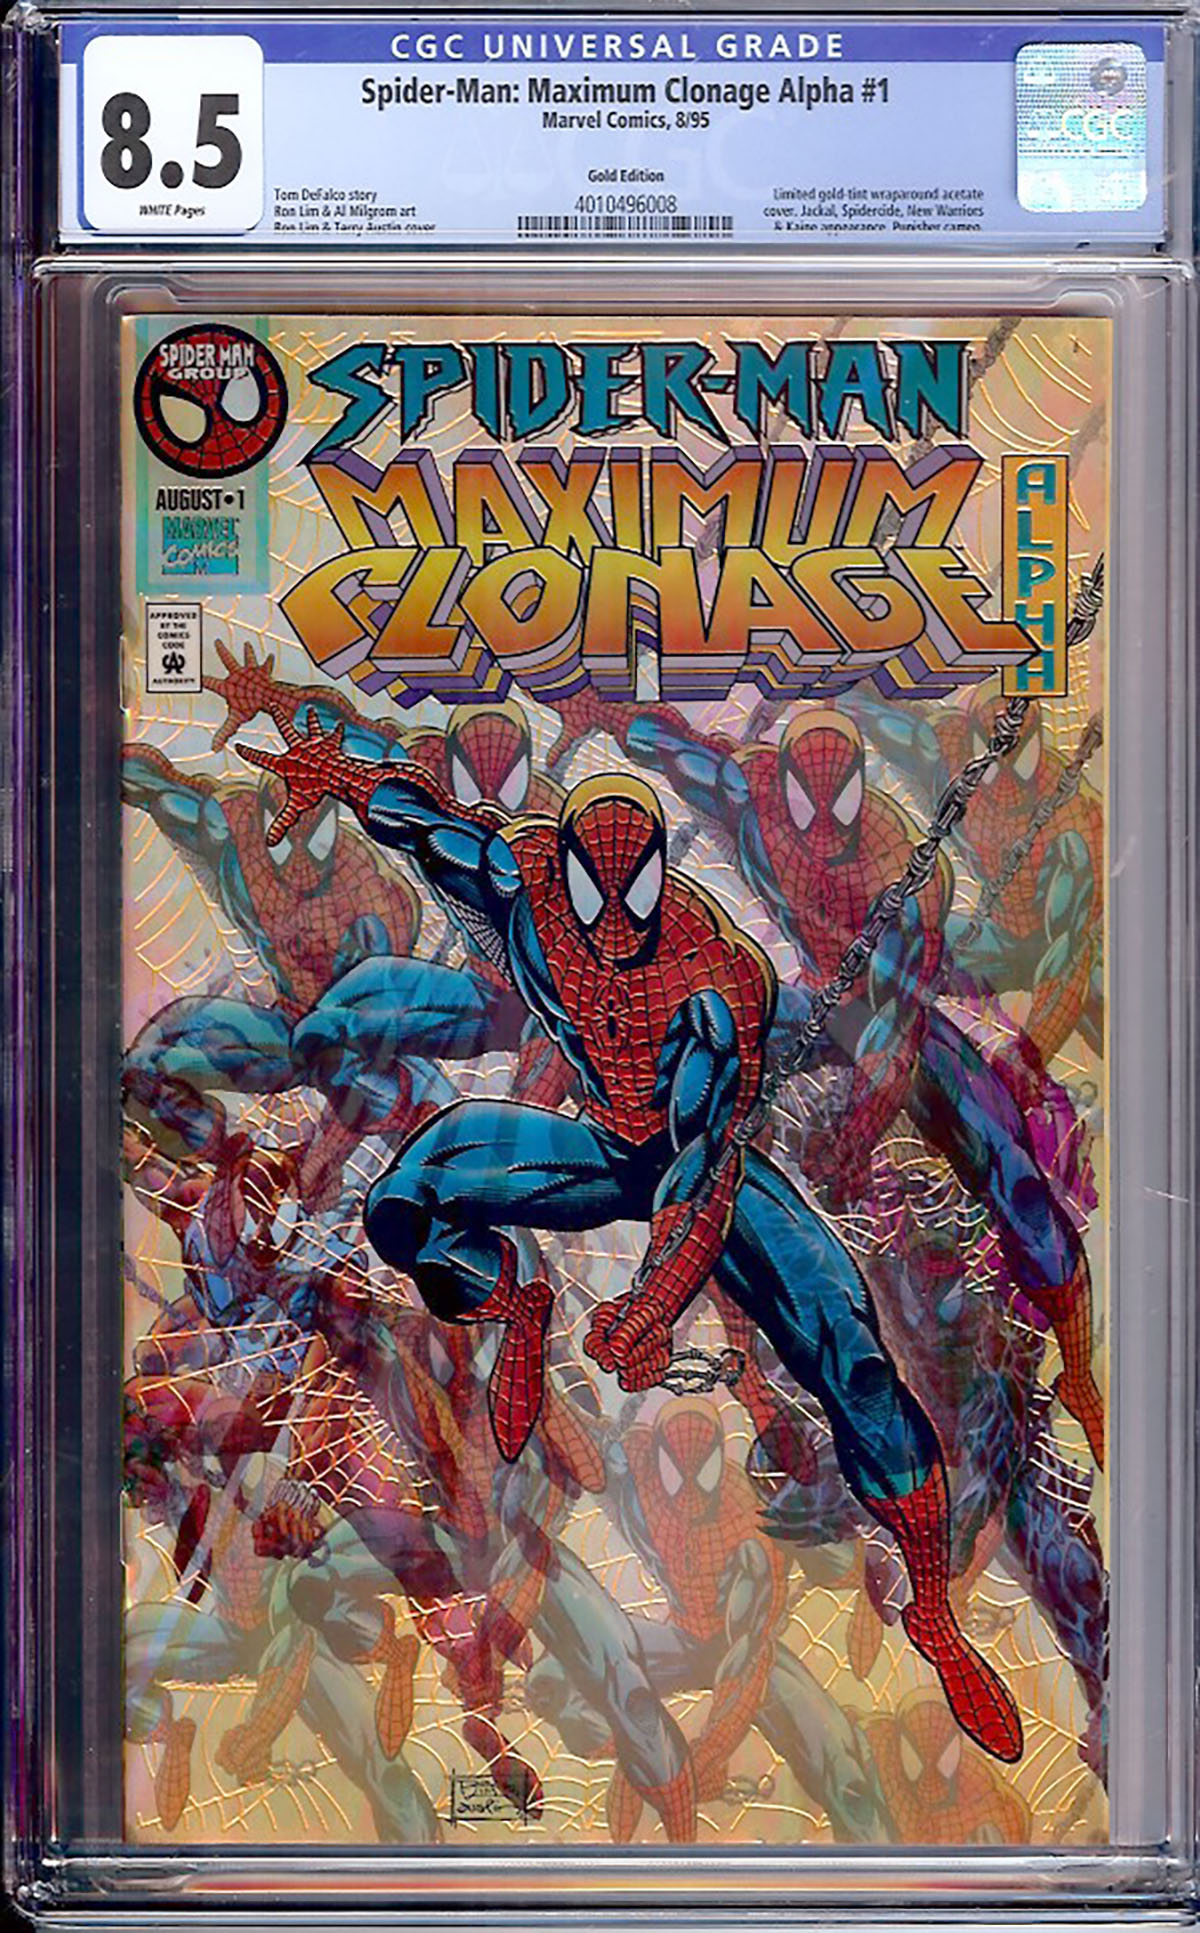 Spider-Man: Maximum Clonage Alpha #1 CGC 8.5 w Gold Edition